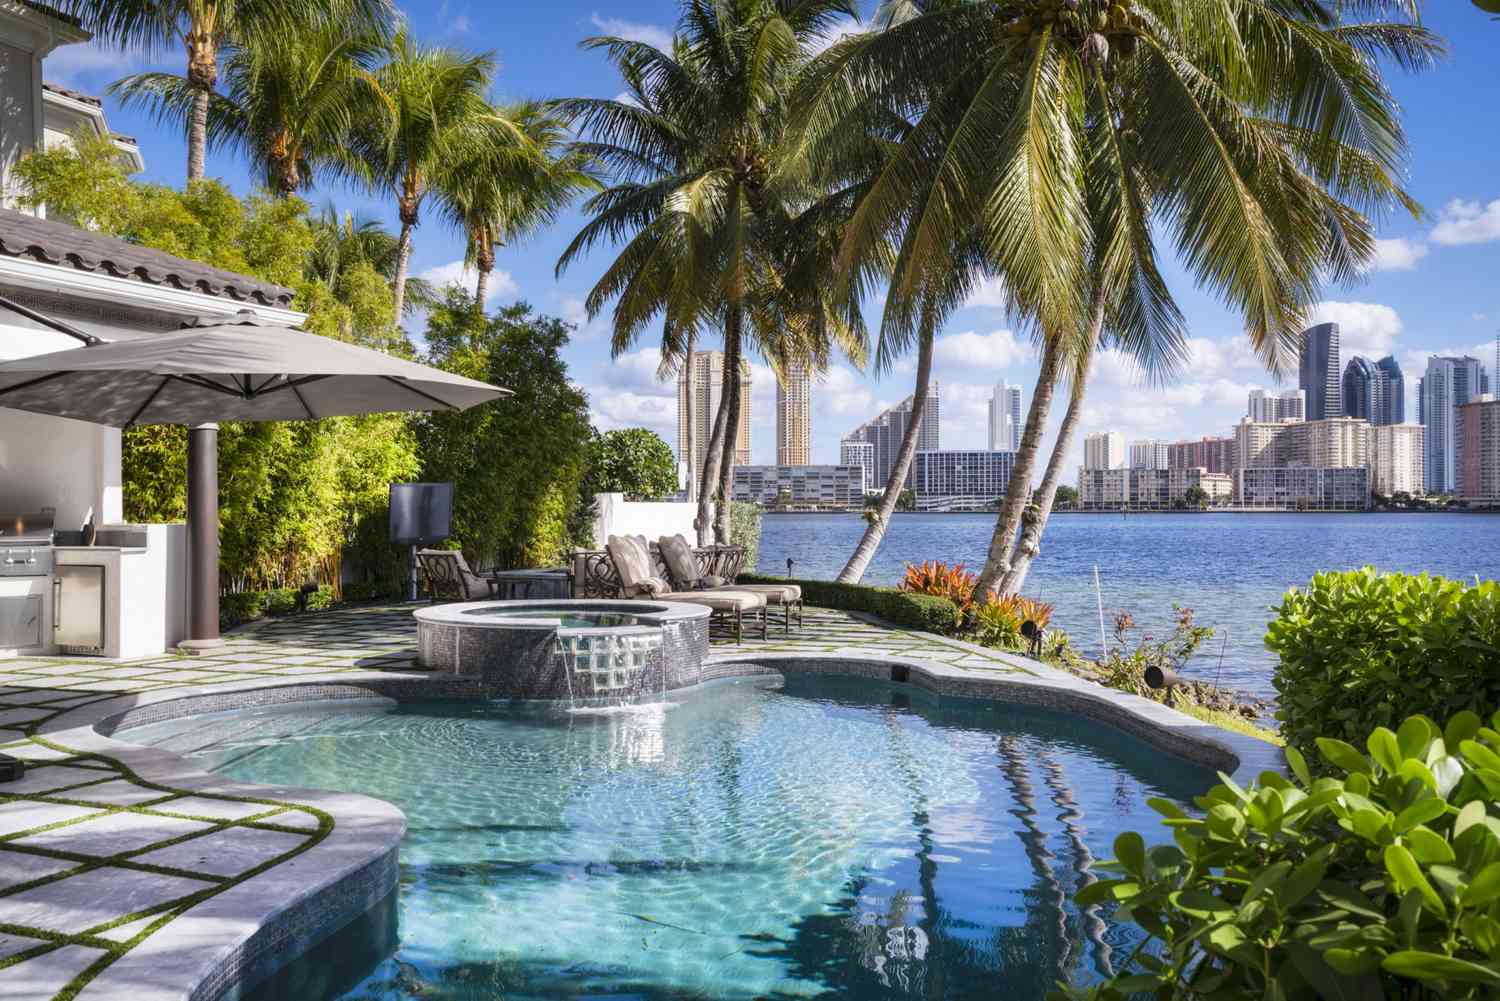 DJ Khaled Sells Miami Mansion for $4.8 Million